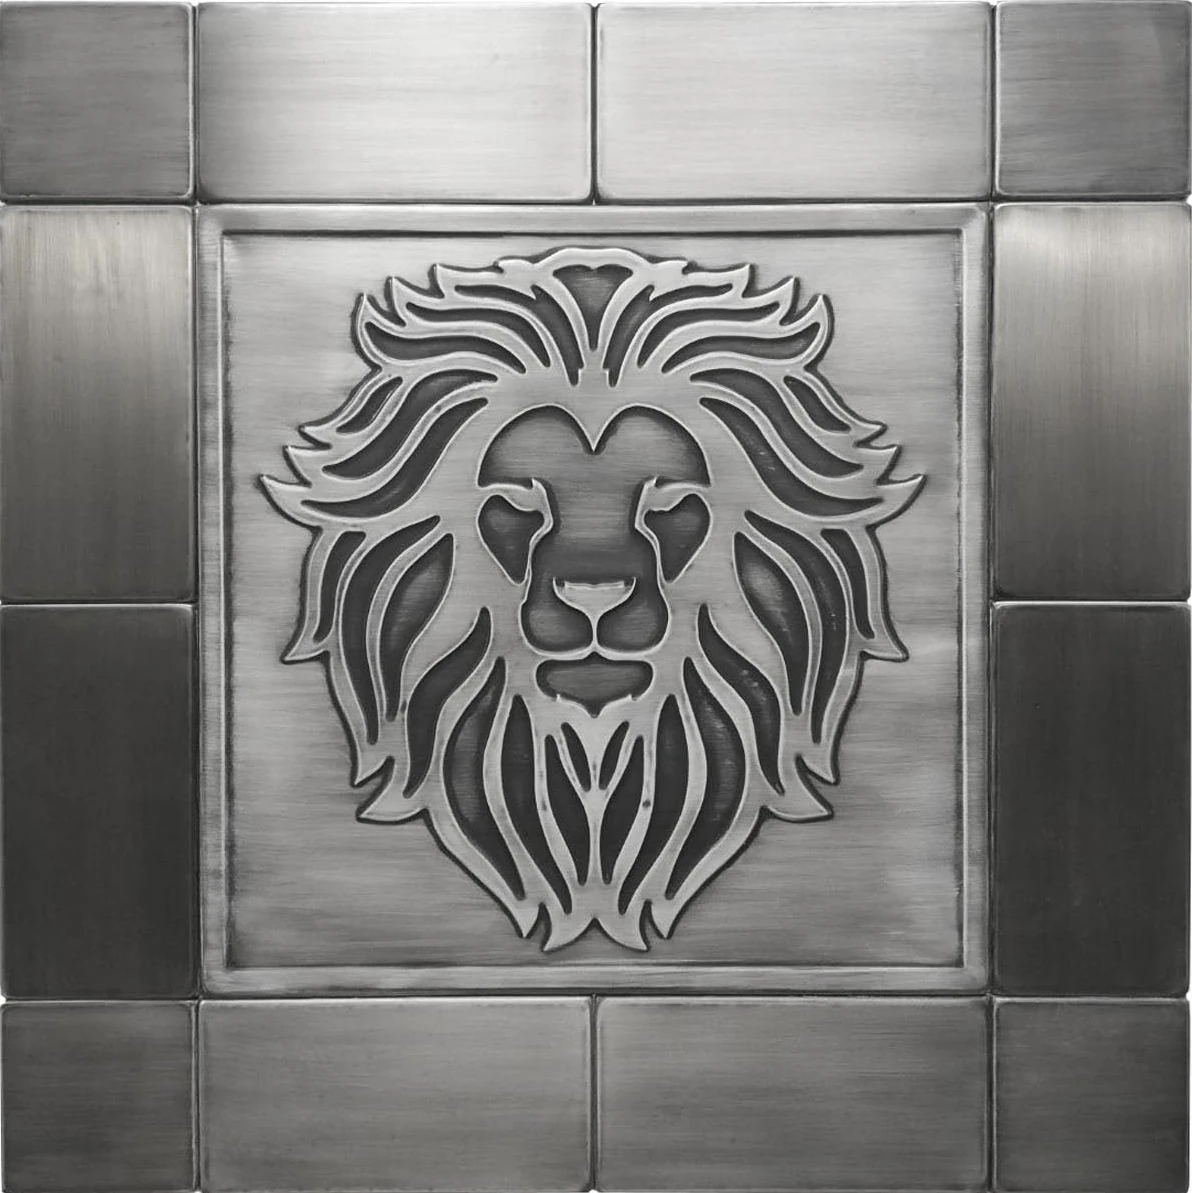 Lion backsplash stainless steel version